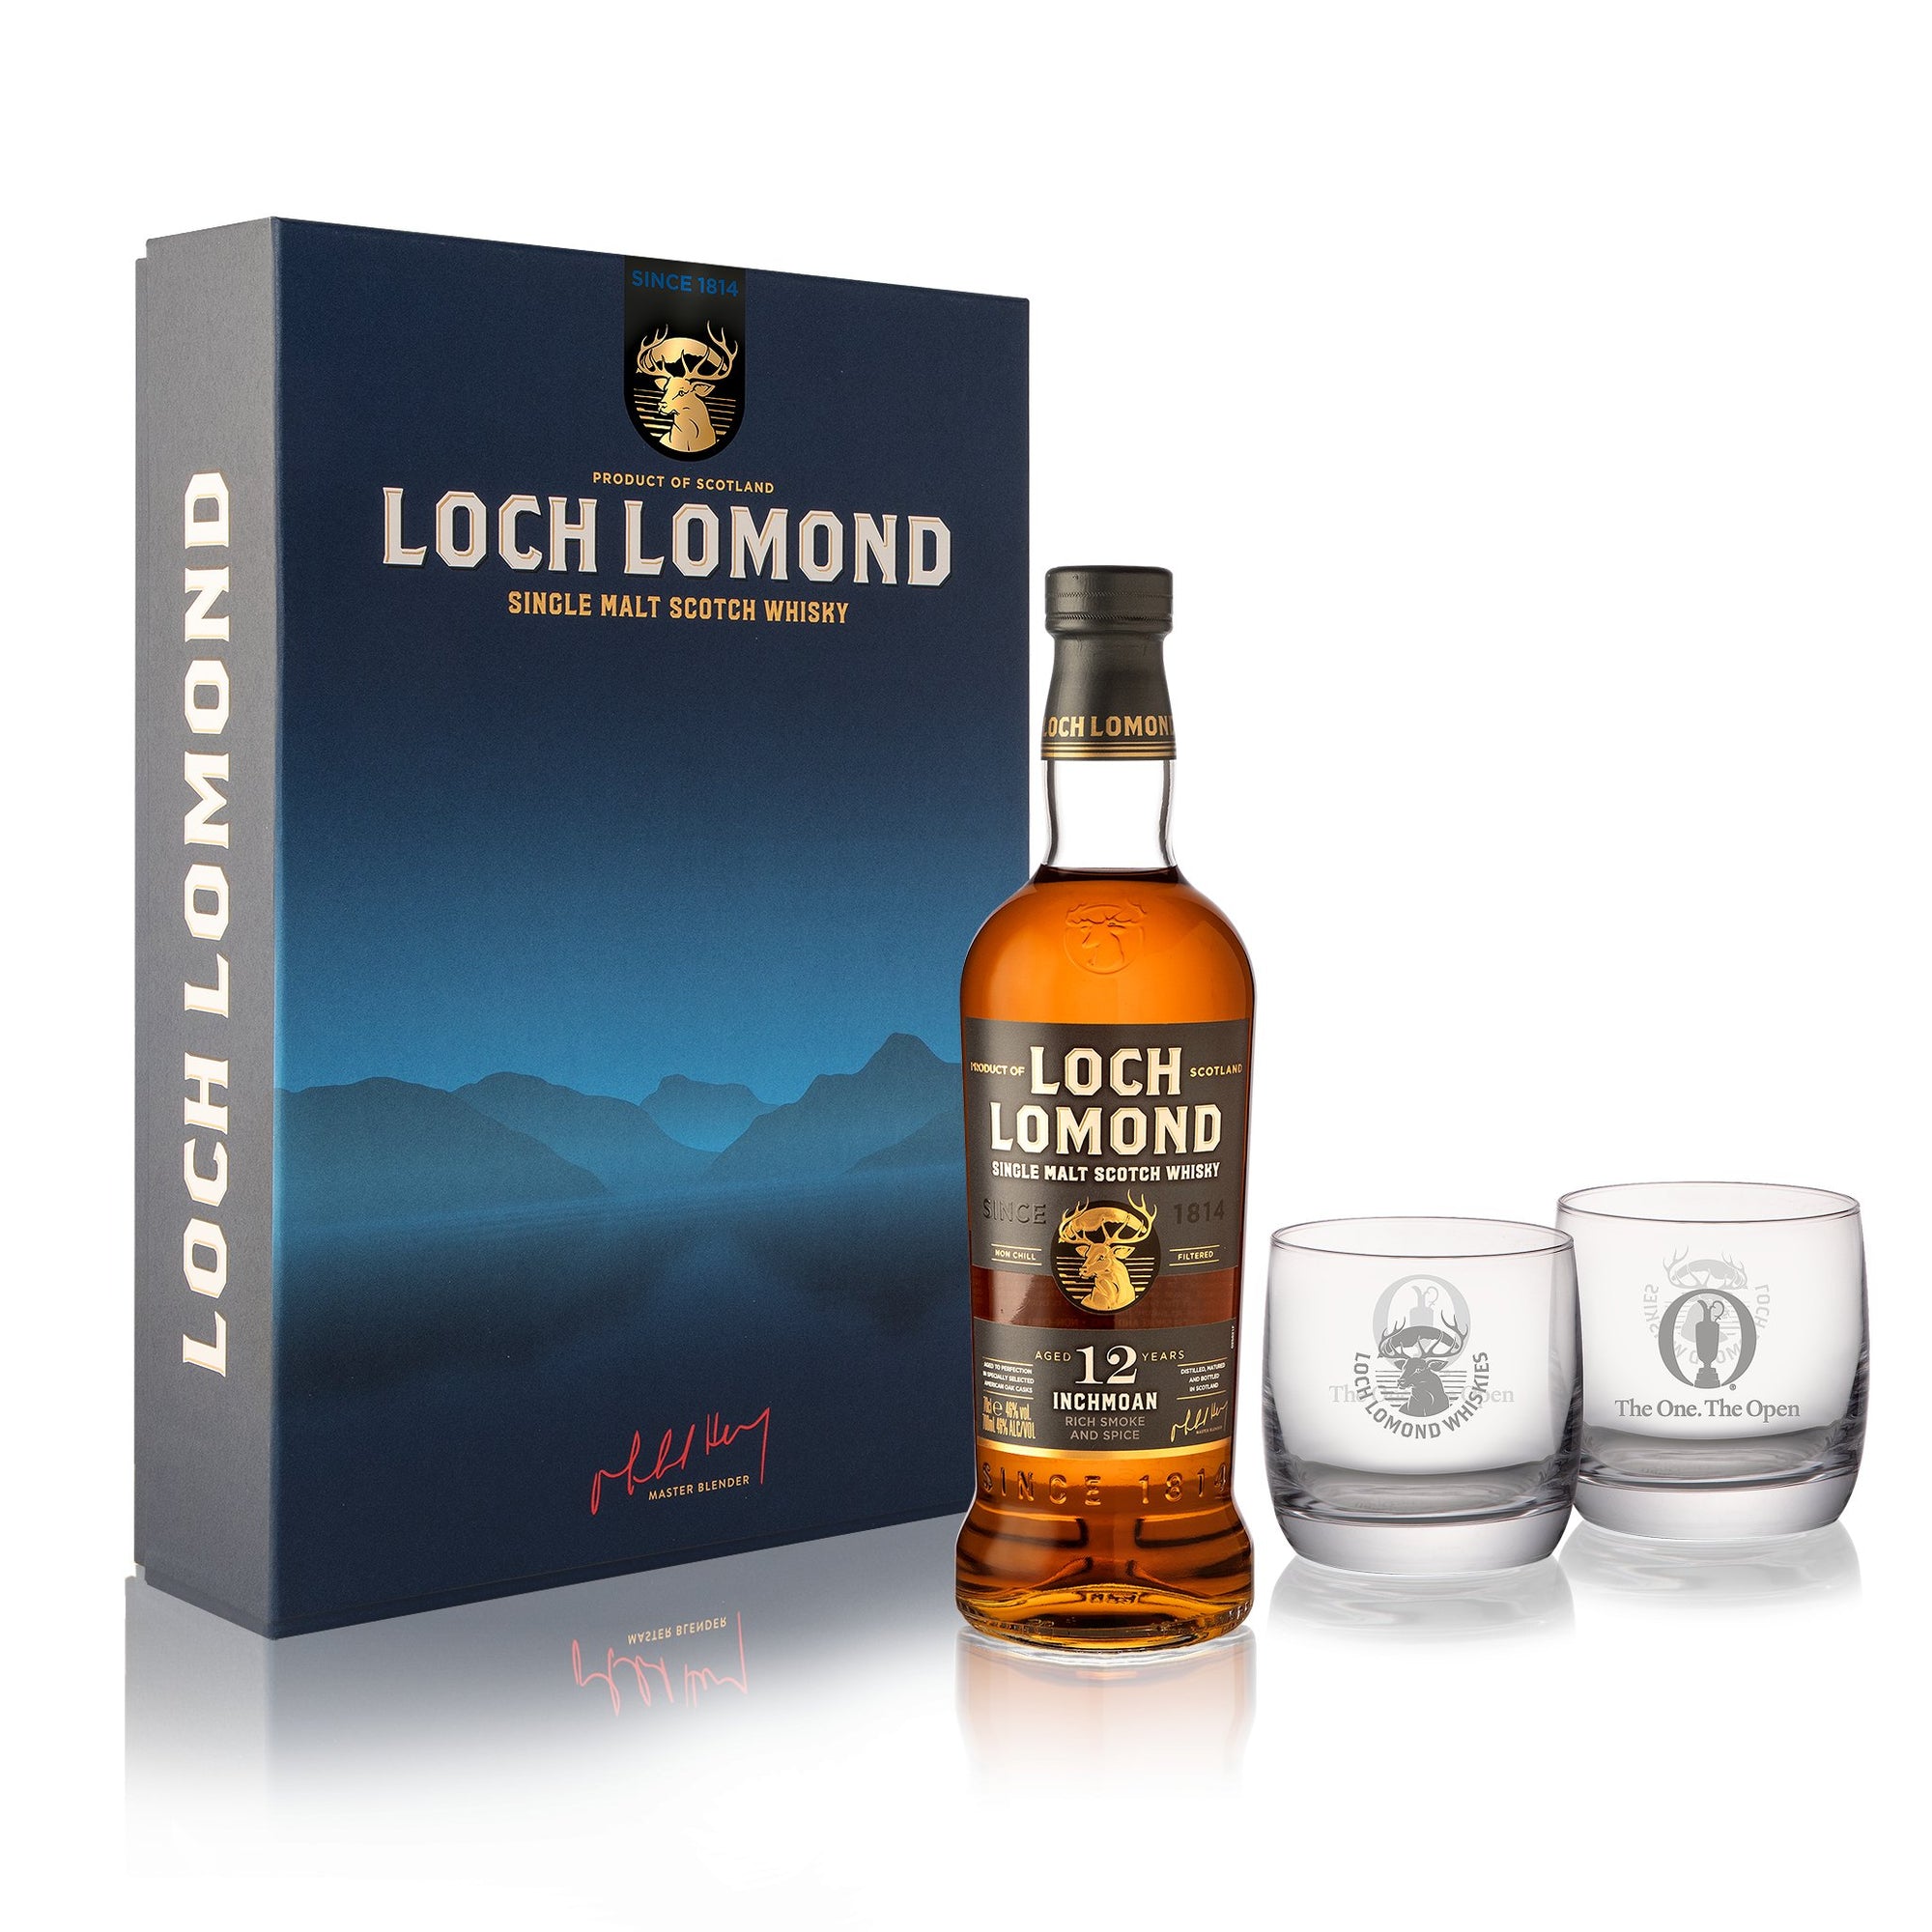 Loch Lomond 12 Year Old Inchmoan Whisky & Glass Box Set (70cl) - Loch Lomond Group